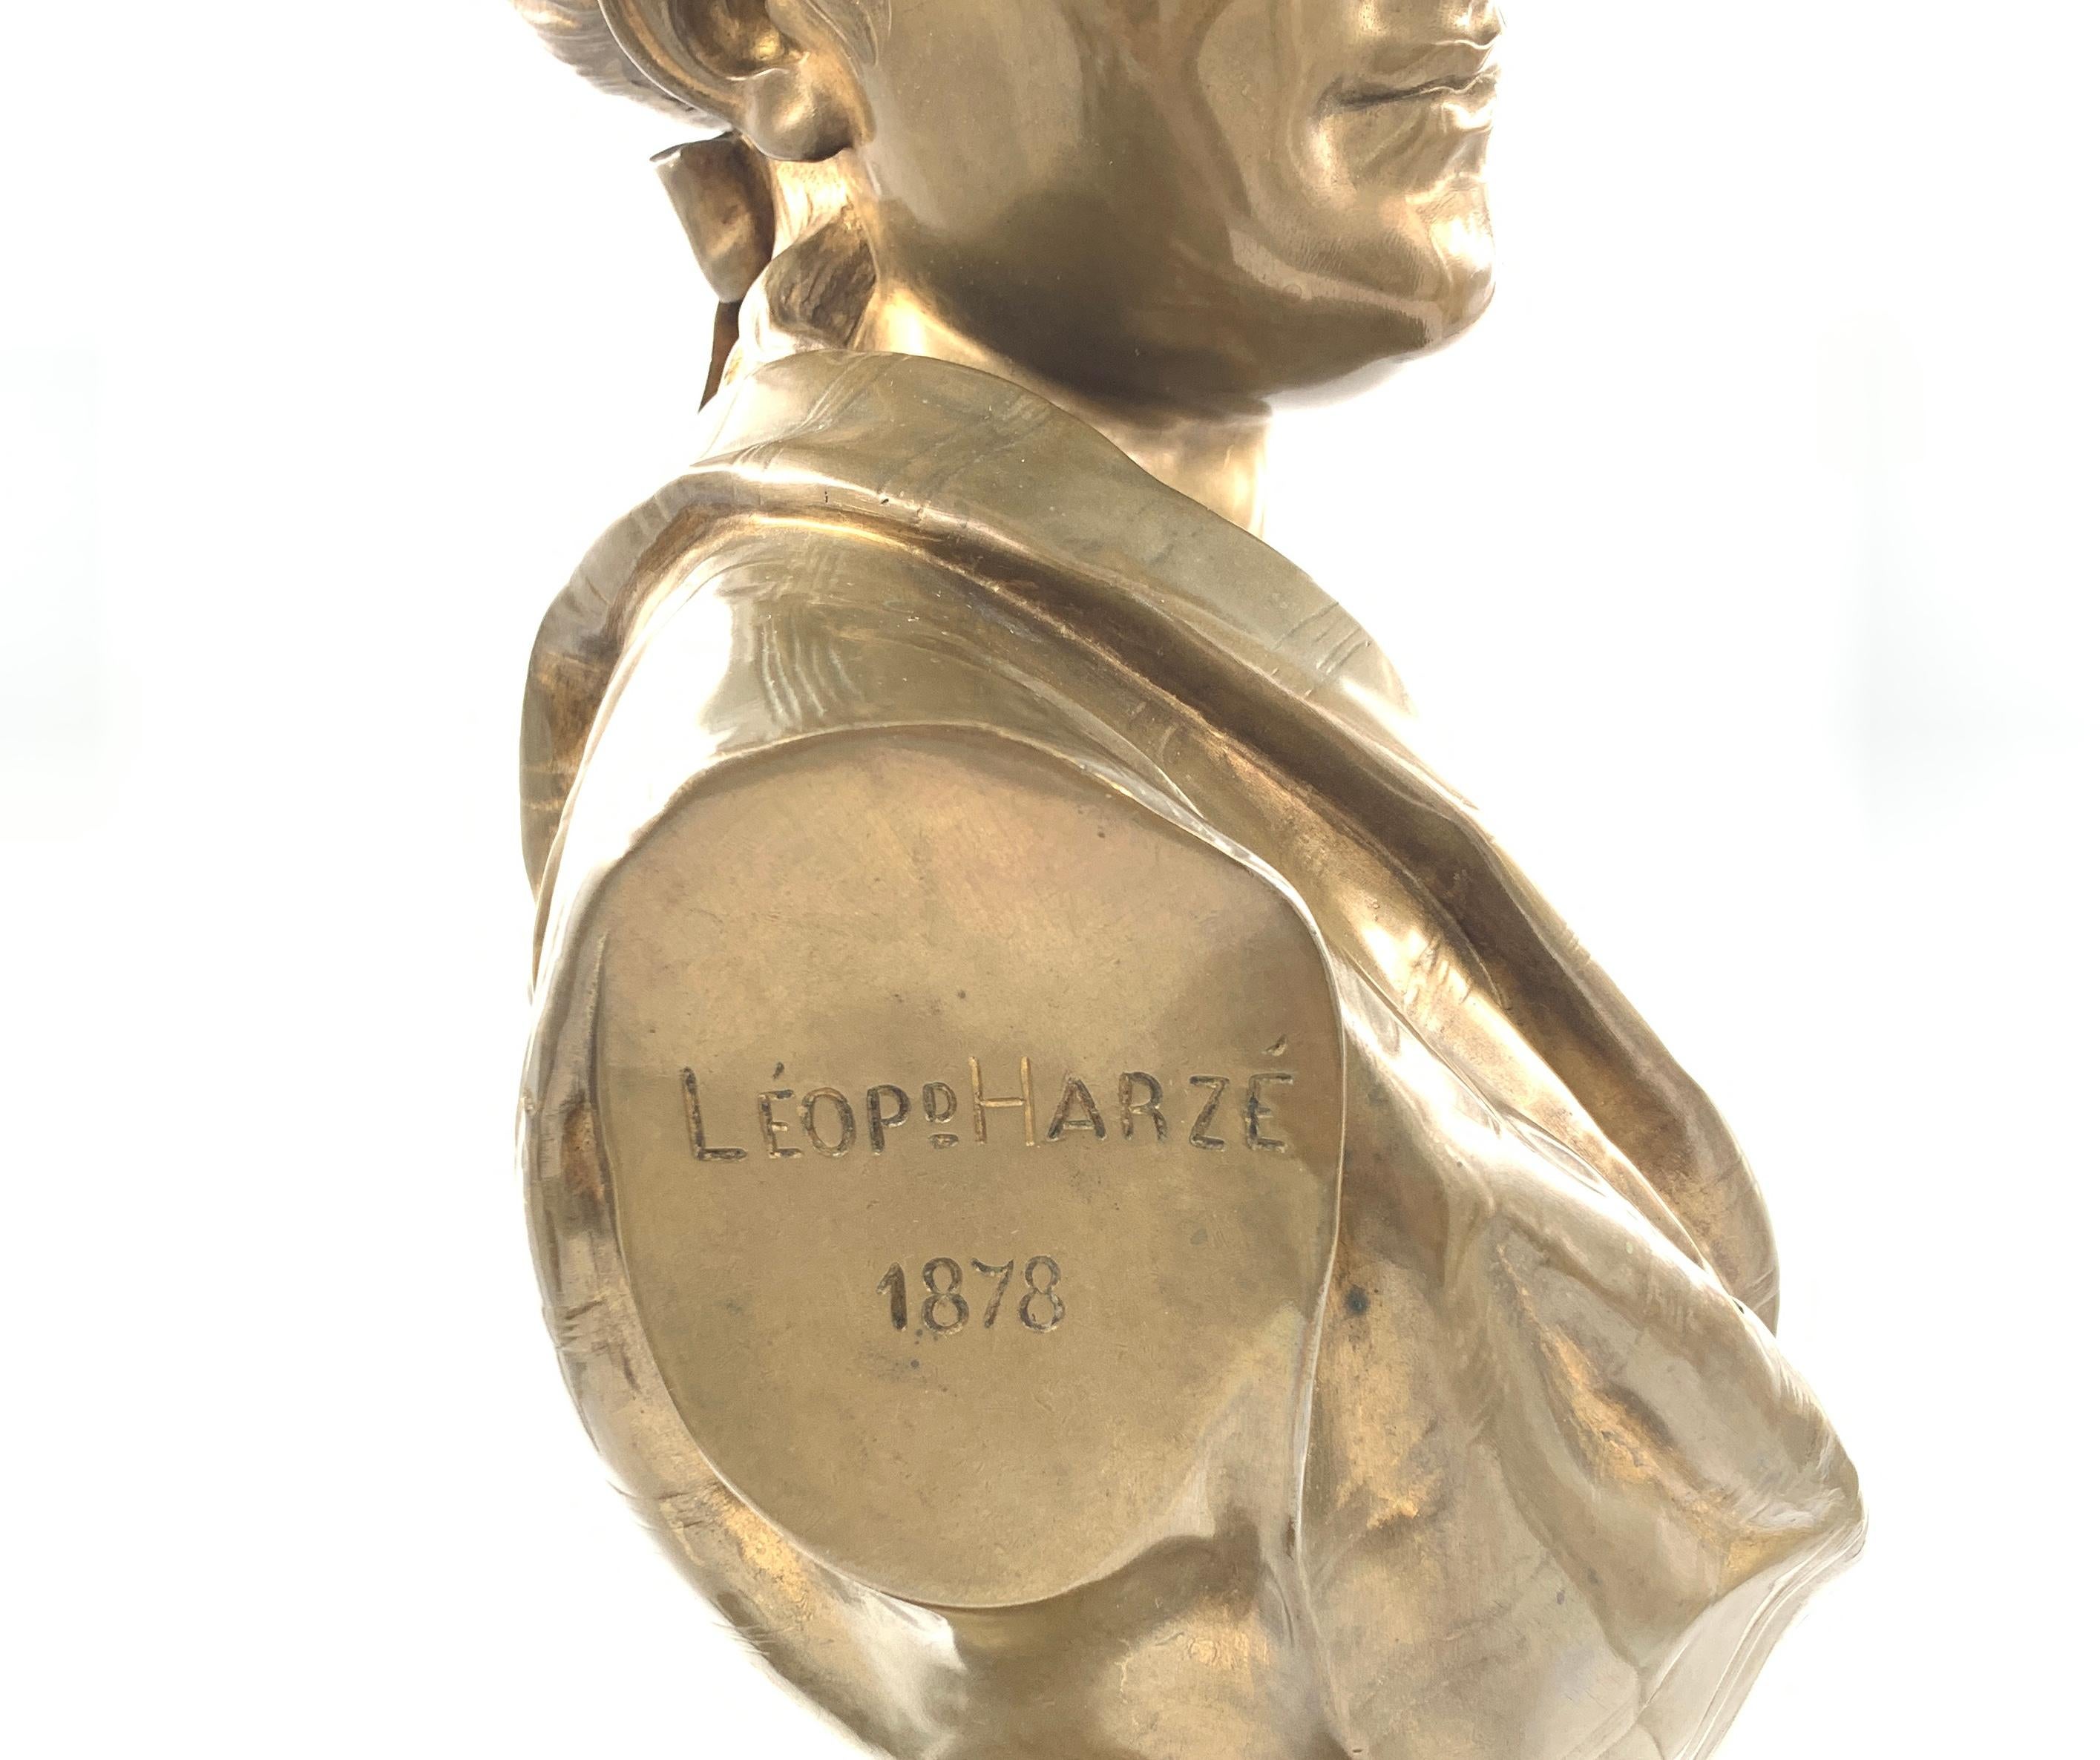 Belgian Bronze Buste of a Lady by Leopold Harzé